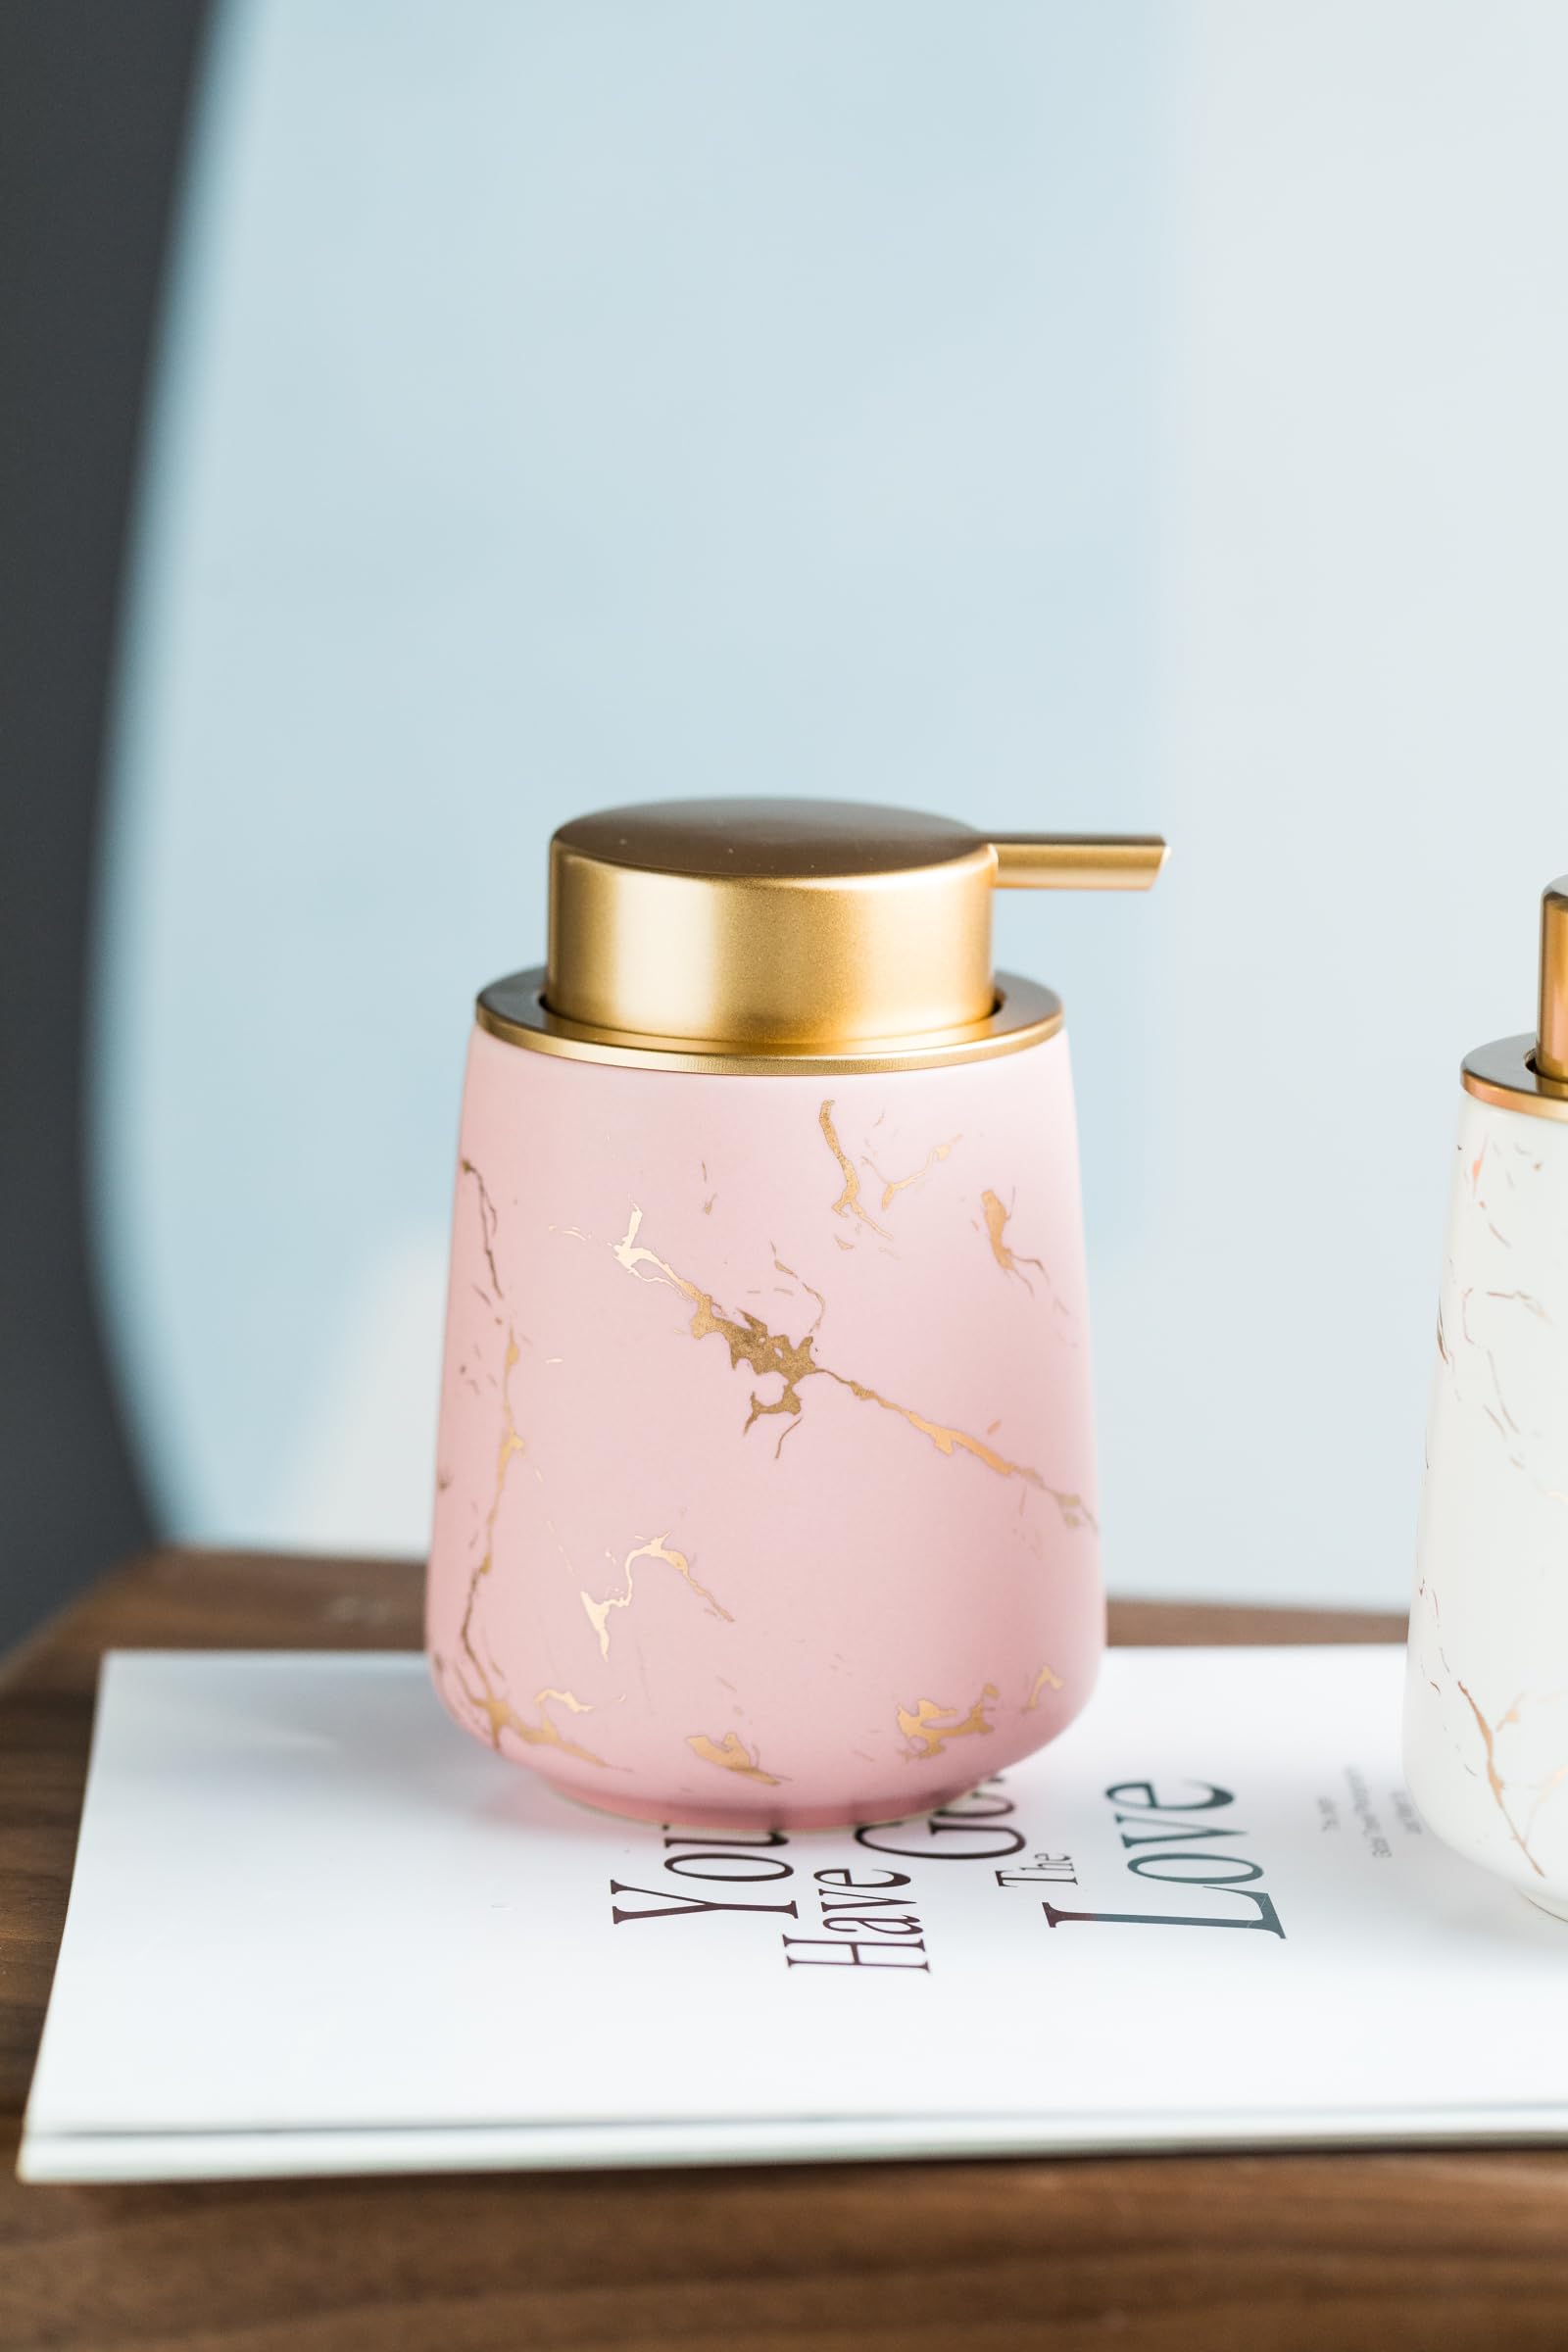 The Better Home 400ml Soap Dispenser Bottle - Pink |Ceramic Liquid Pump Dispenser for Kitchen, Wash-Basin, and Bathroom